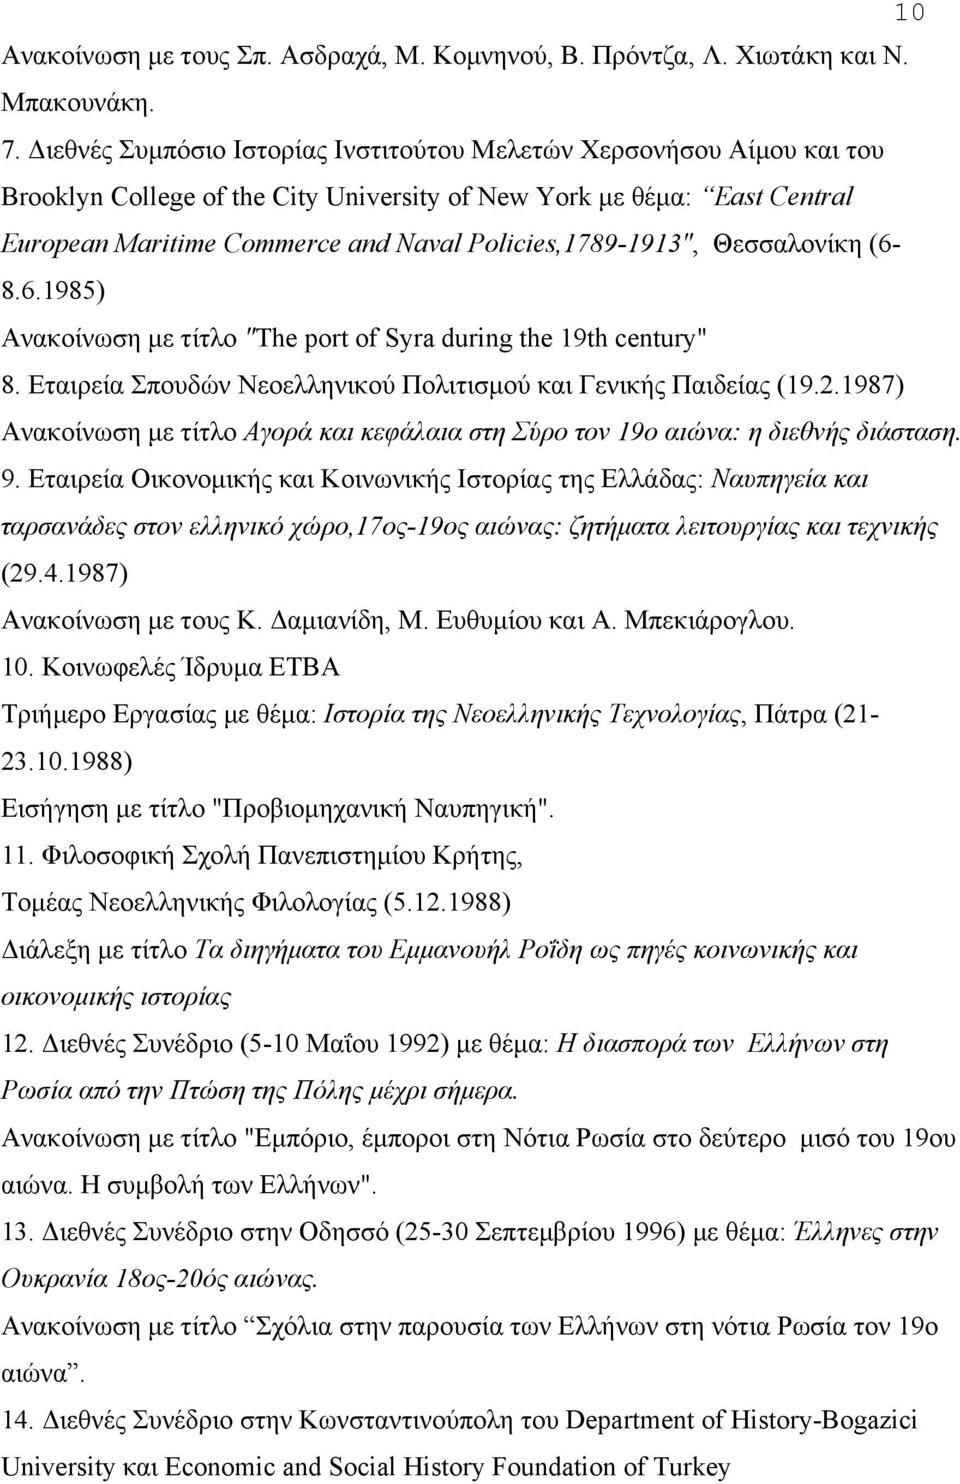 Policies,1789-1913", Θεσσαλονίκη (6-8.6.1985) Aνακοίνωση µε τίτλο "The port of Syra during the 19th century" 8. Eταιρεία Σπουδών Nεοελληνικού Πολιτισµού και Γενικής Παιδείας (19.2.